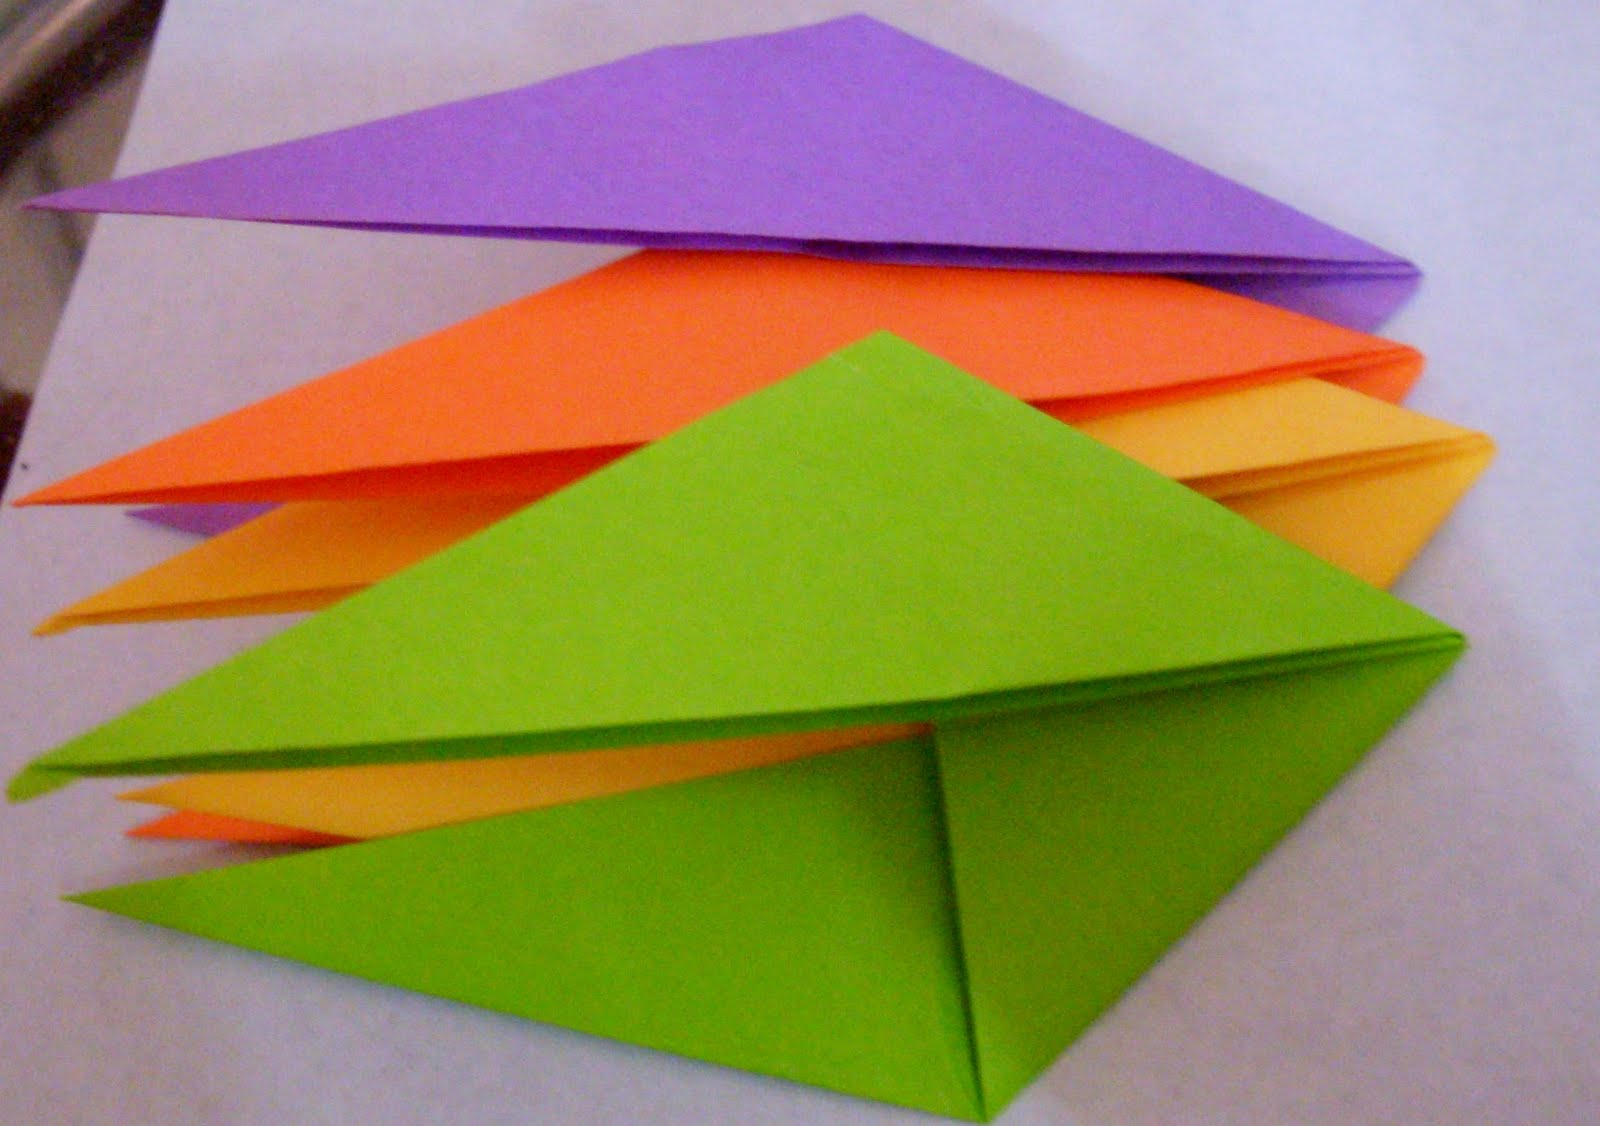 Tomoko Fuse Origami Instructions Origami Origami Tomoko Fuse Espiral